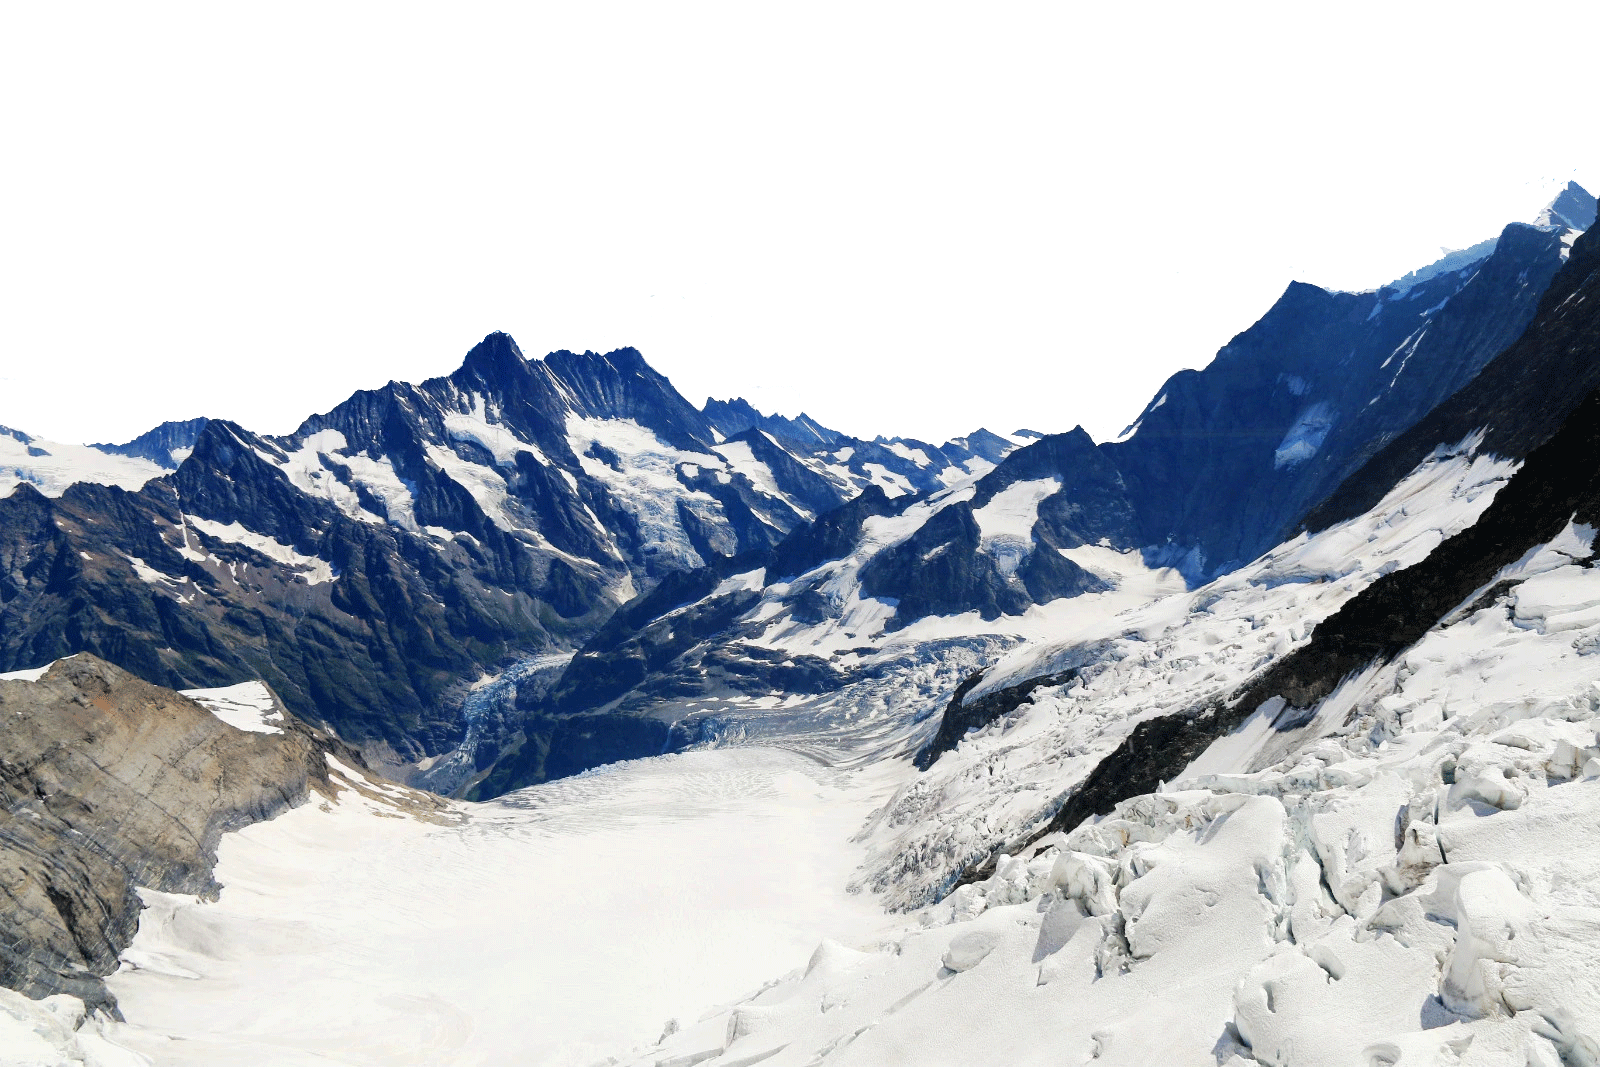 Snowy Alps – Switzerland